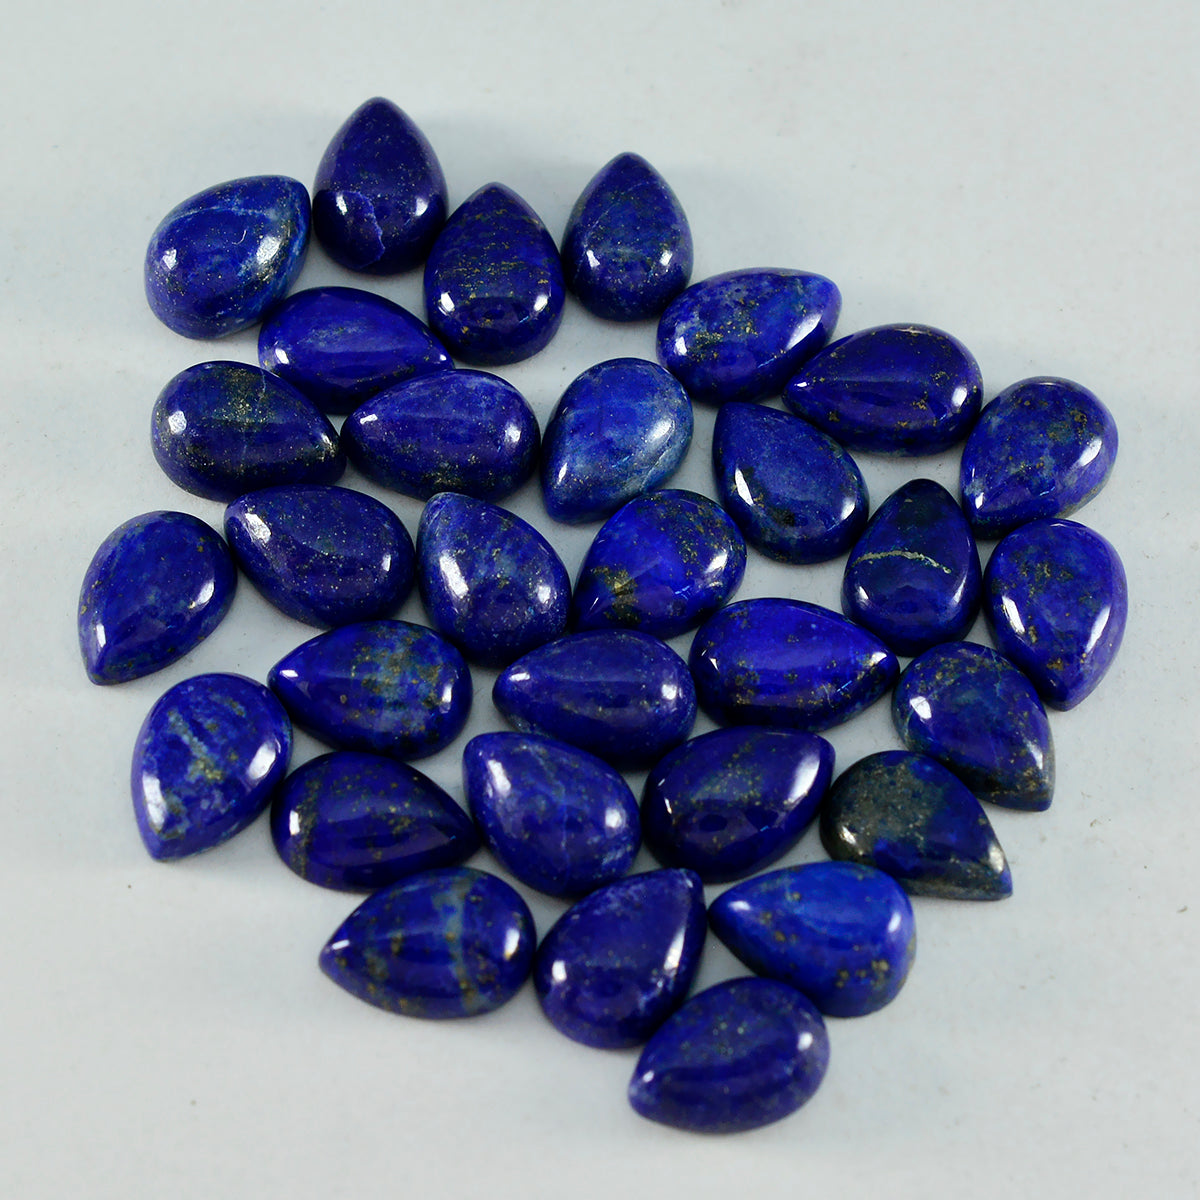 Riyogems 1PC Blauwe Lapis Lazuli Cabochon 5x7 mm Peervorm A+1 Kwaliteit Losse Edelsteen